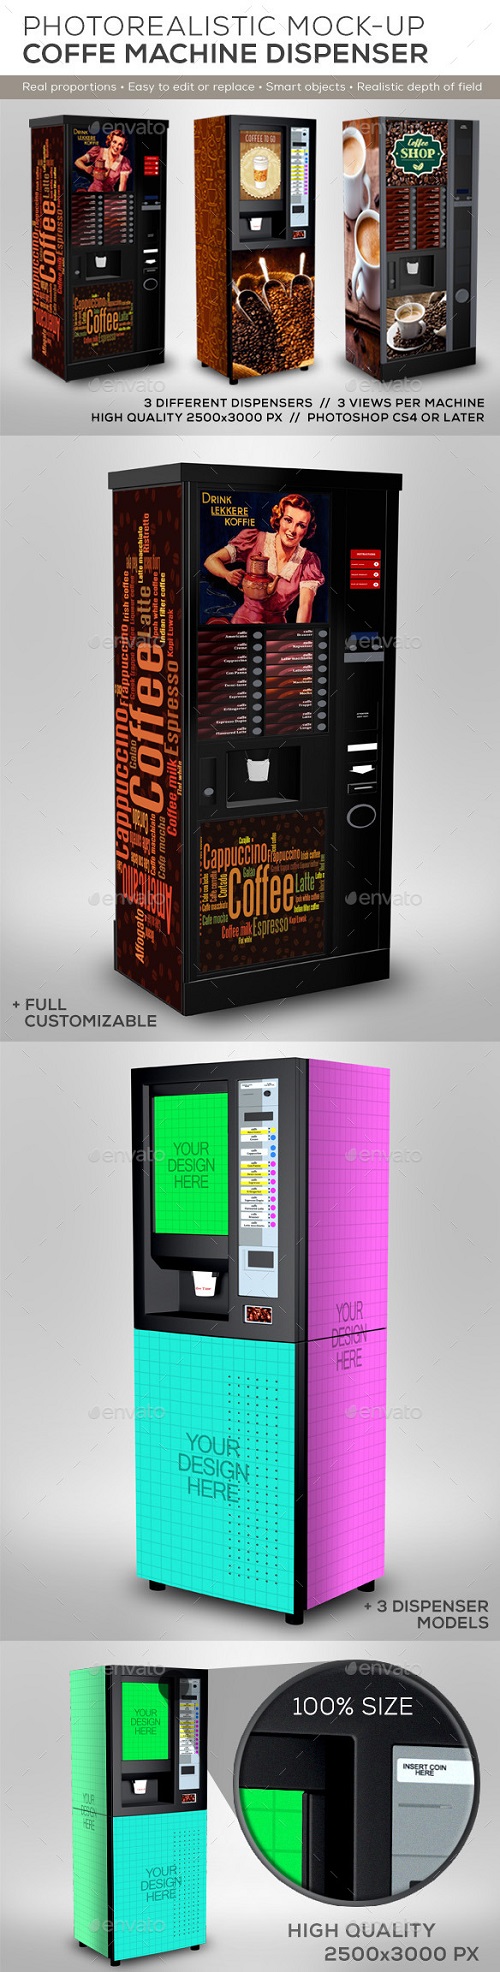 Coffee Cup Dispenser Machine Mock-Up - 8819603